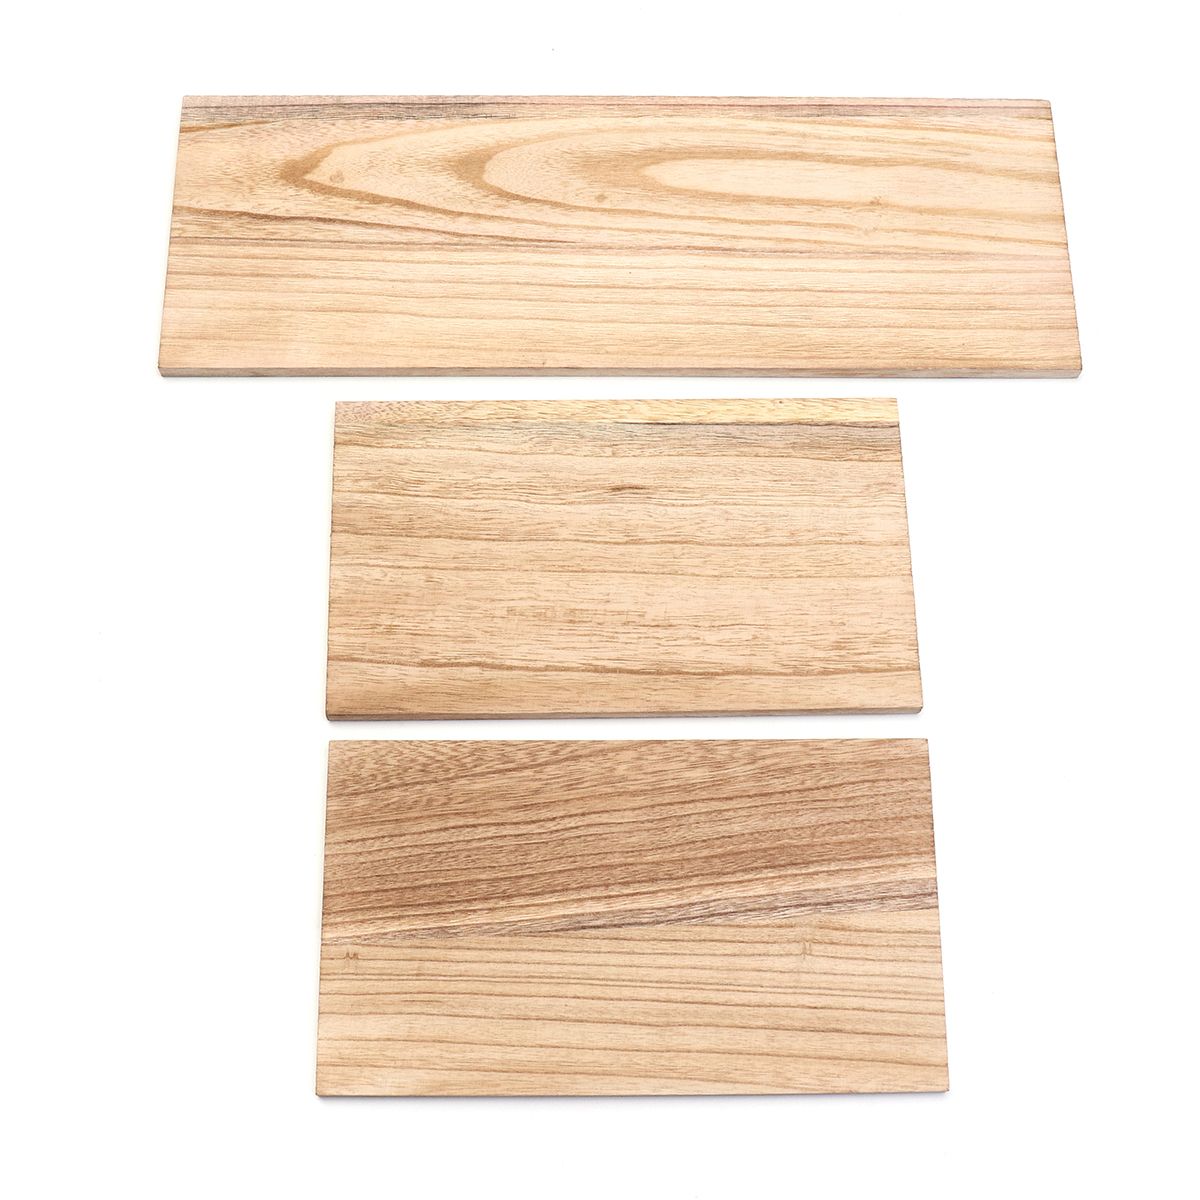 50x50x19cm-Retro-Rhombus-Wood-Iron-Craft-Wall-Shelf-Rack-Storage-Industrial-Style-Decorations-1283255